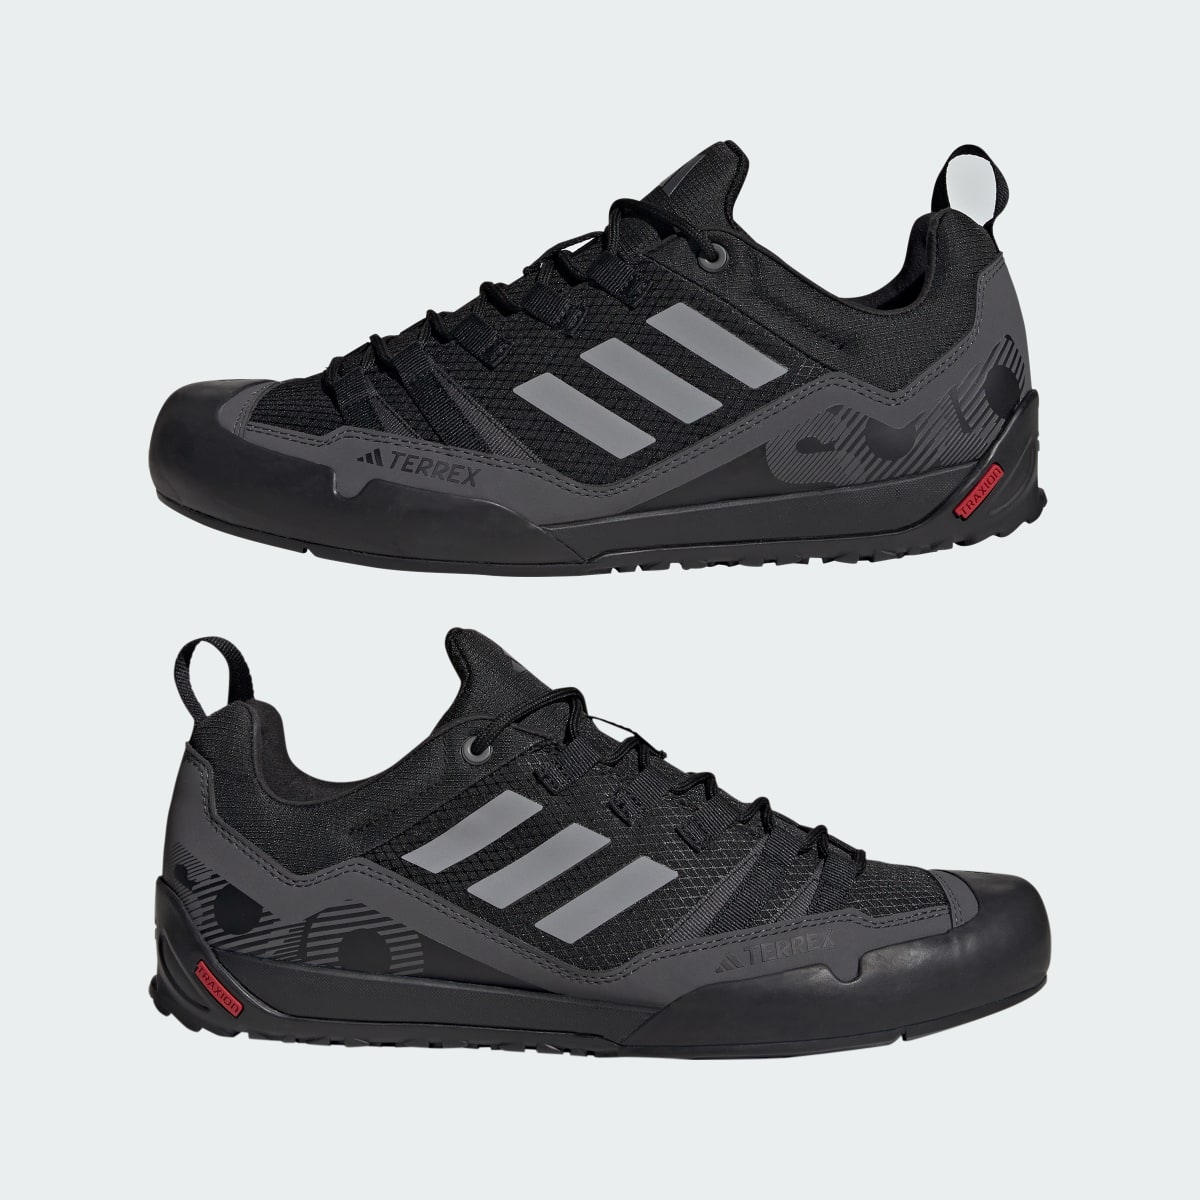 Adidas Terrex Swift Solo 2.0 Hiking Shoes. 11